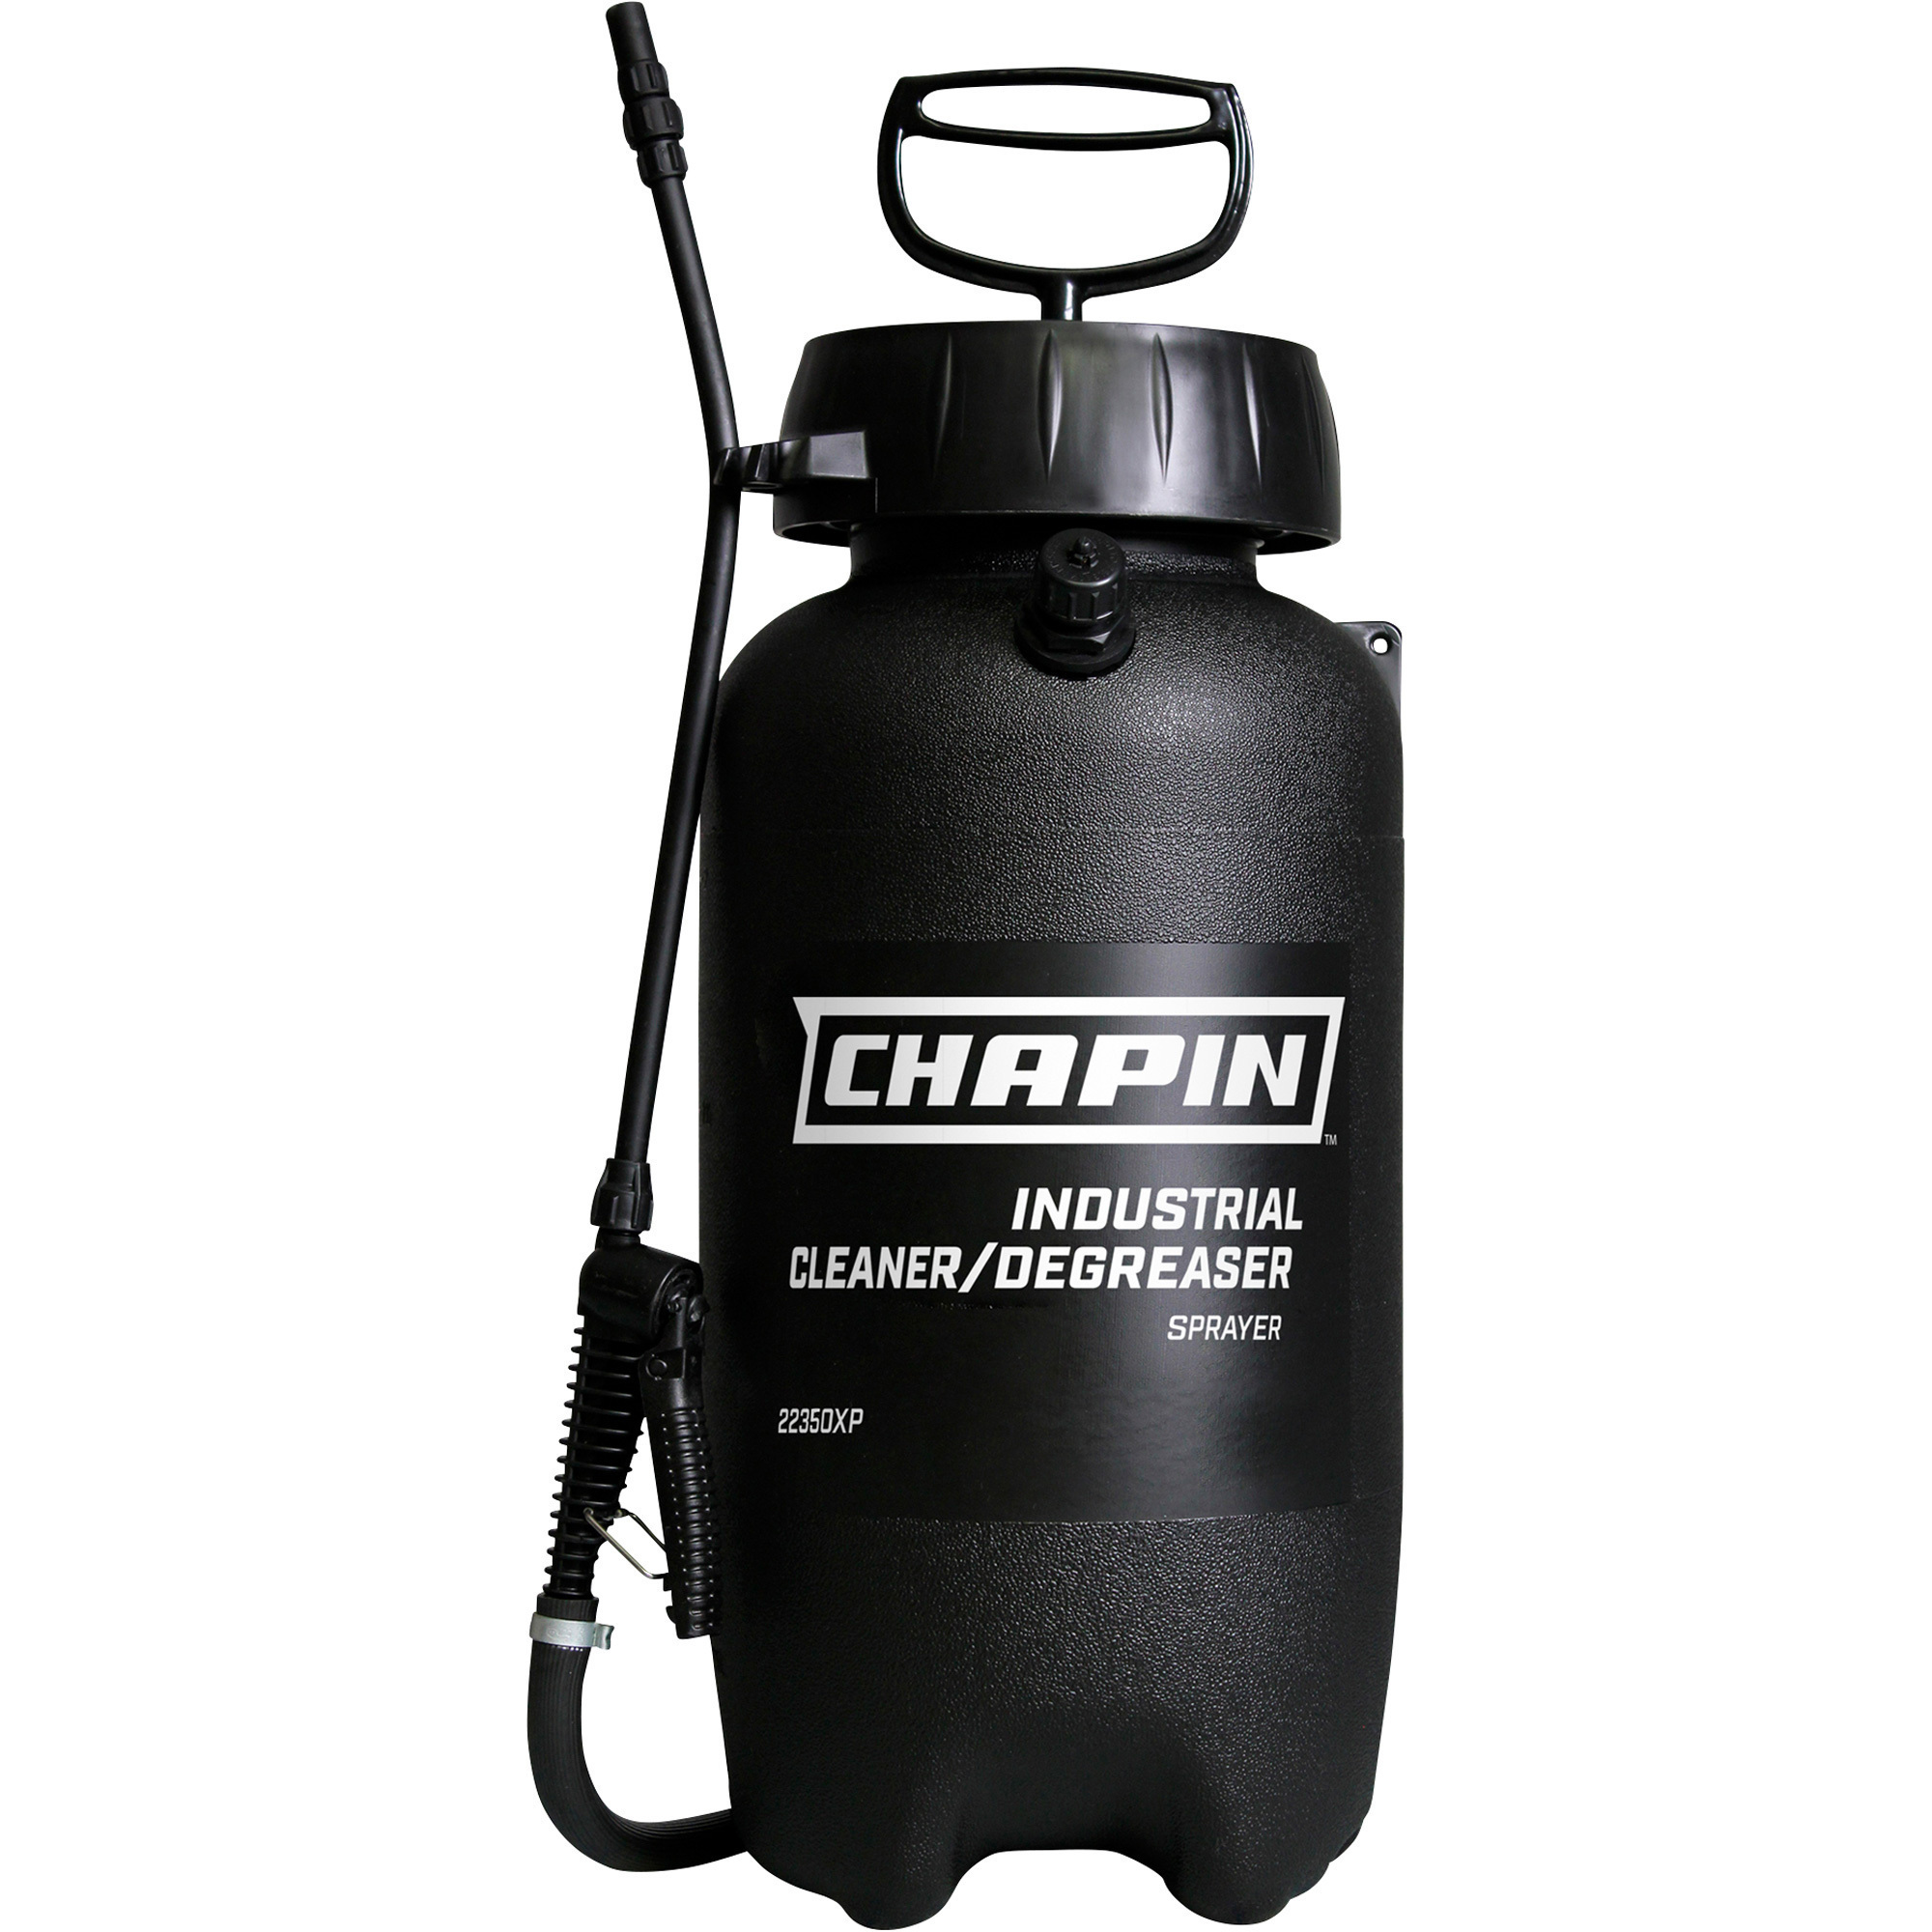 Chapin Cleaning/Degreasing Portable Sprayer, 45 PSI, 2-Gallon Capacity, Model 22350XP